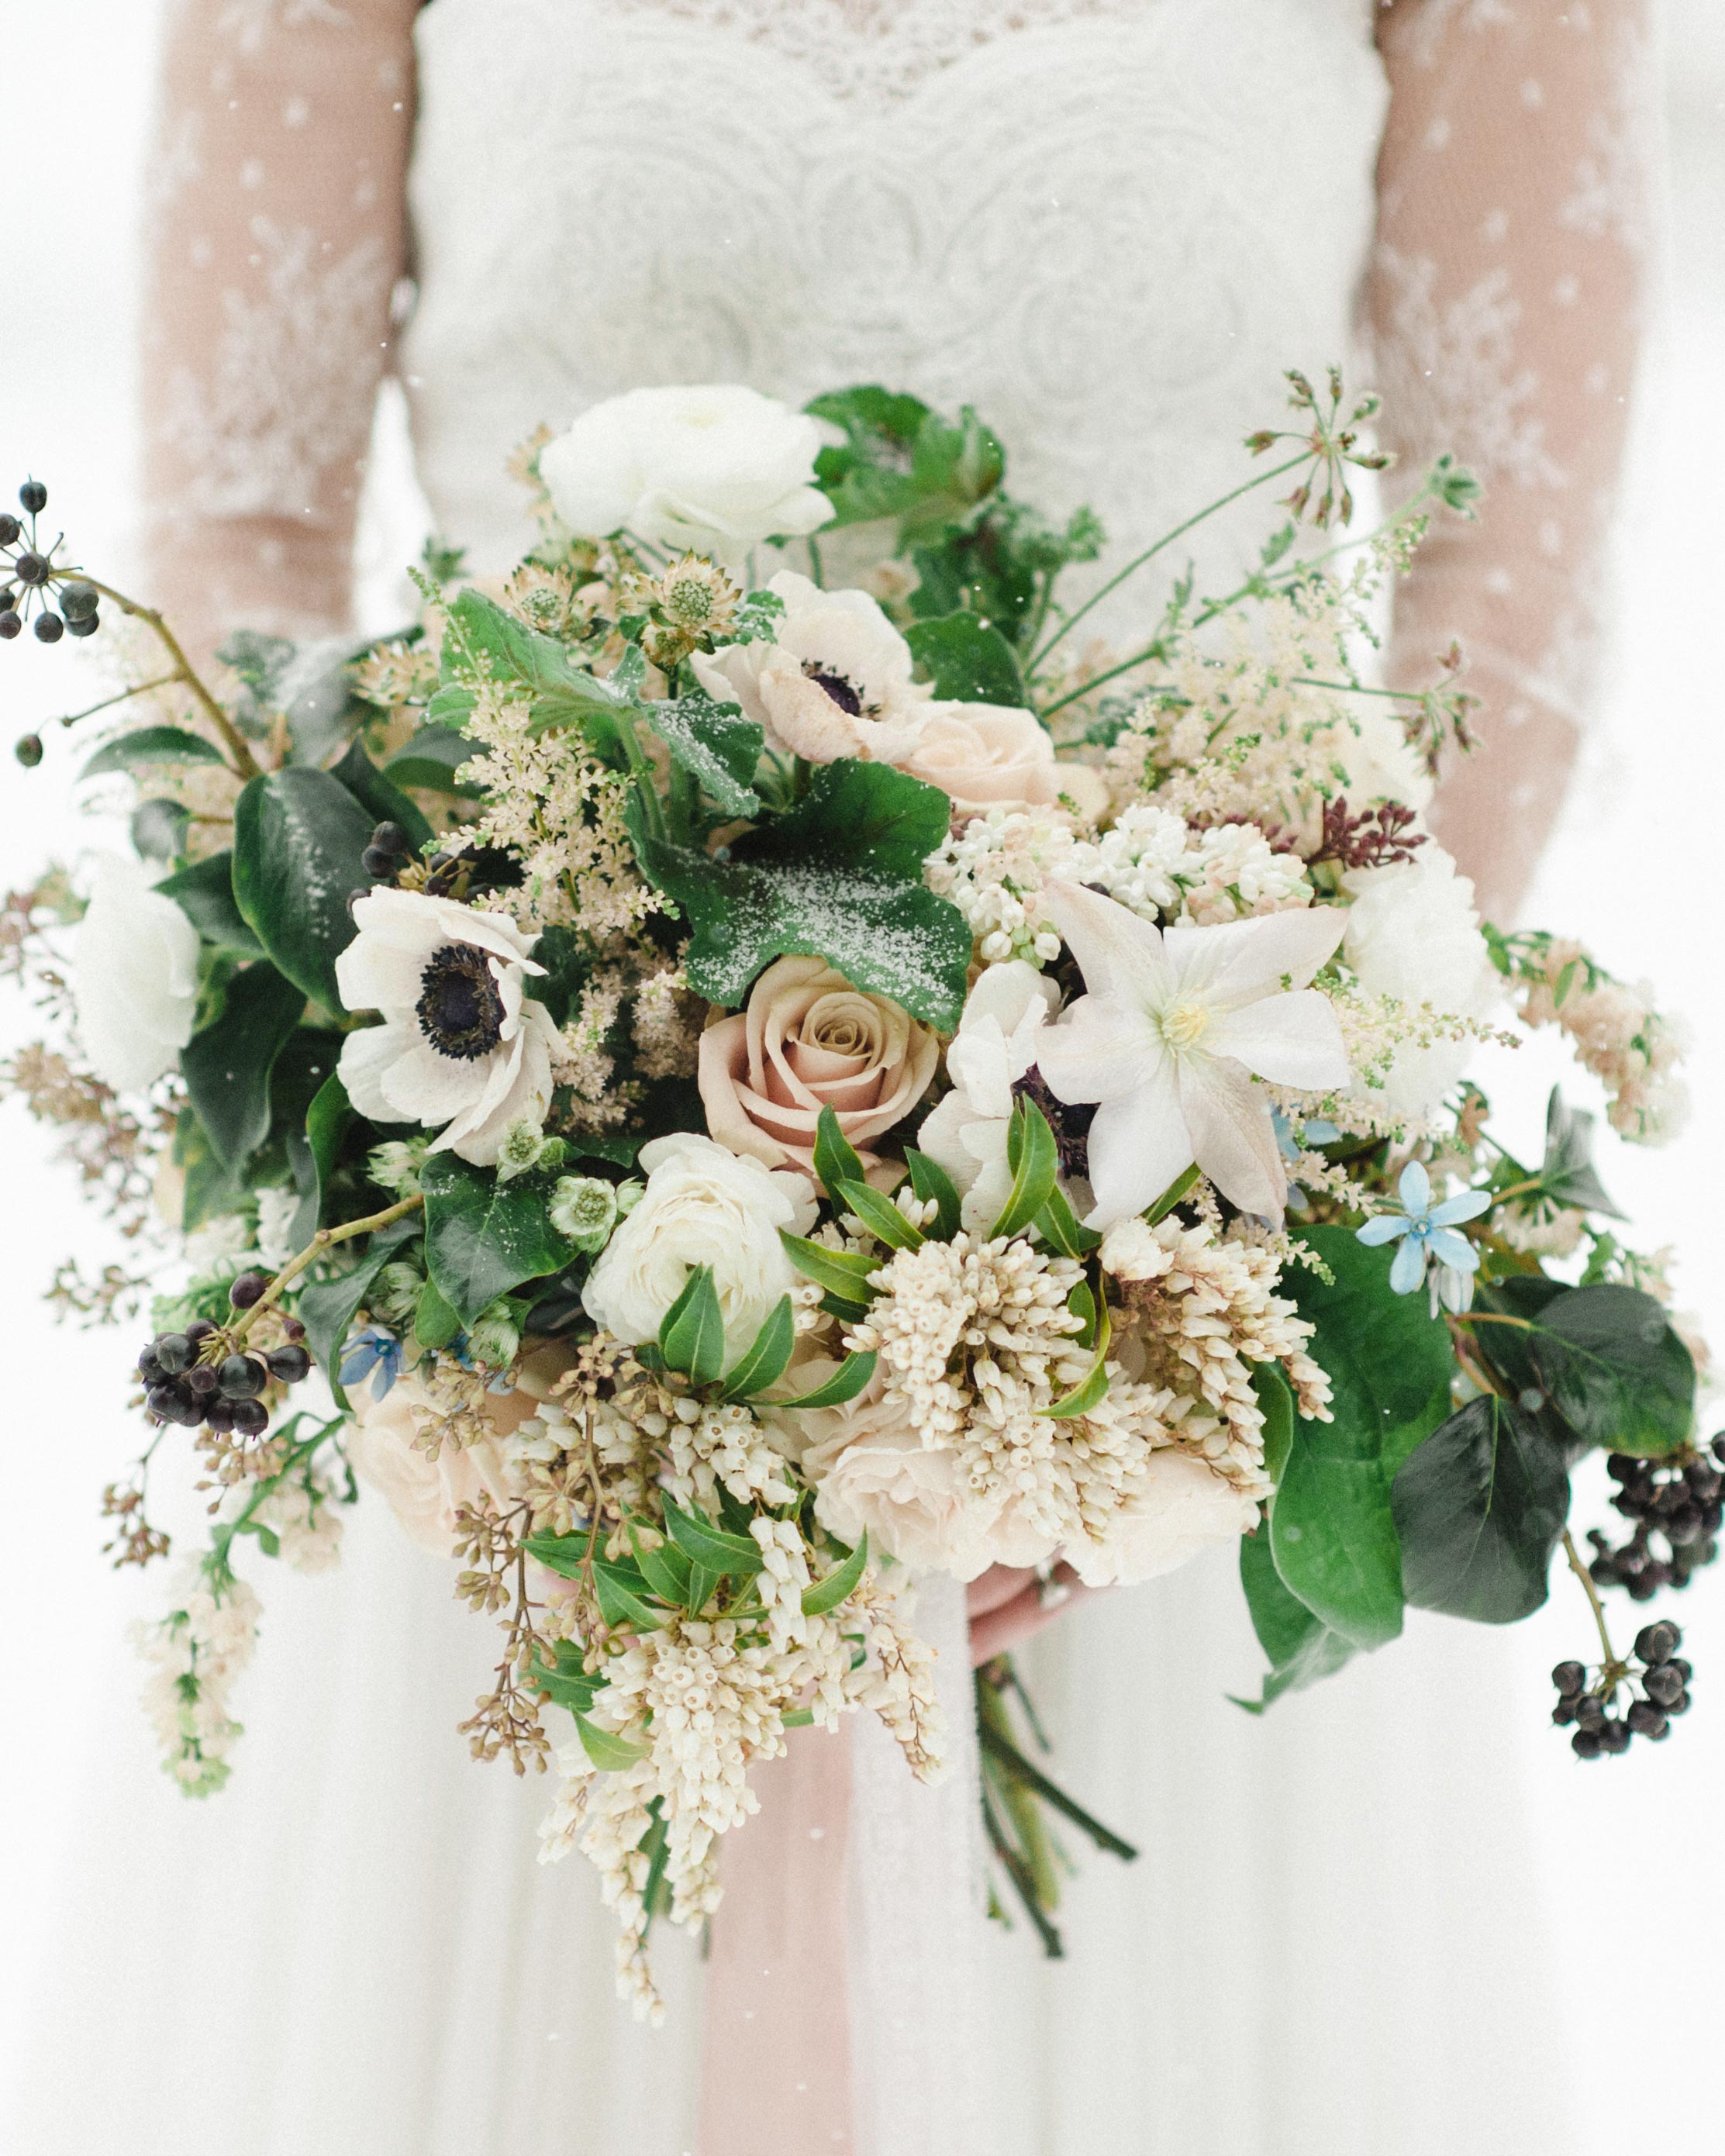 Find the Best Flower for Your Wedding Color Palette | Martha Stewart